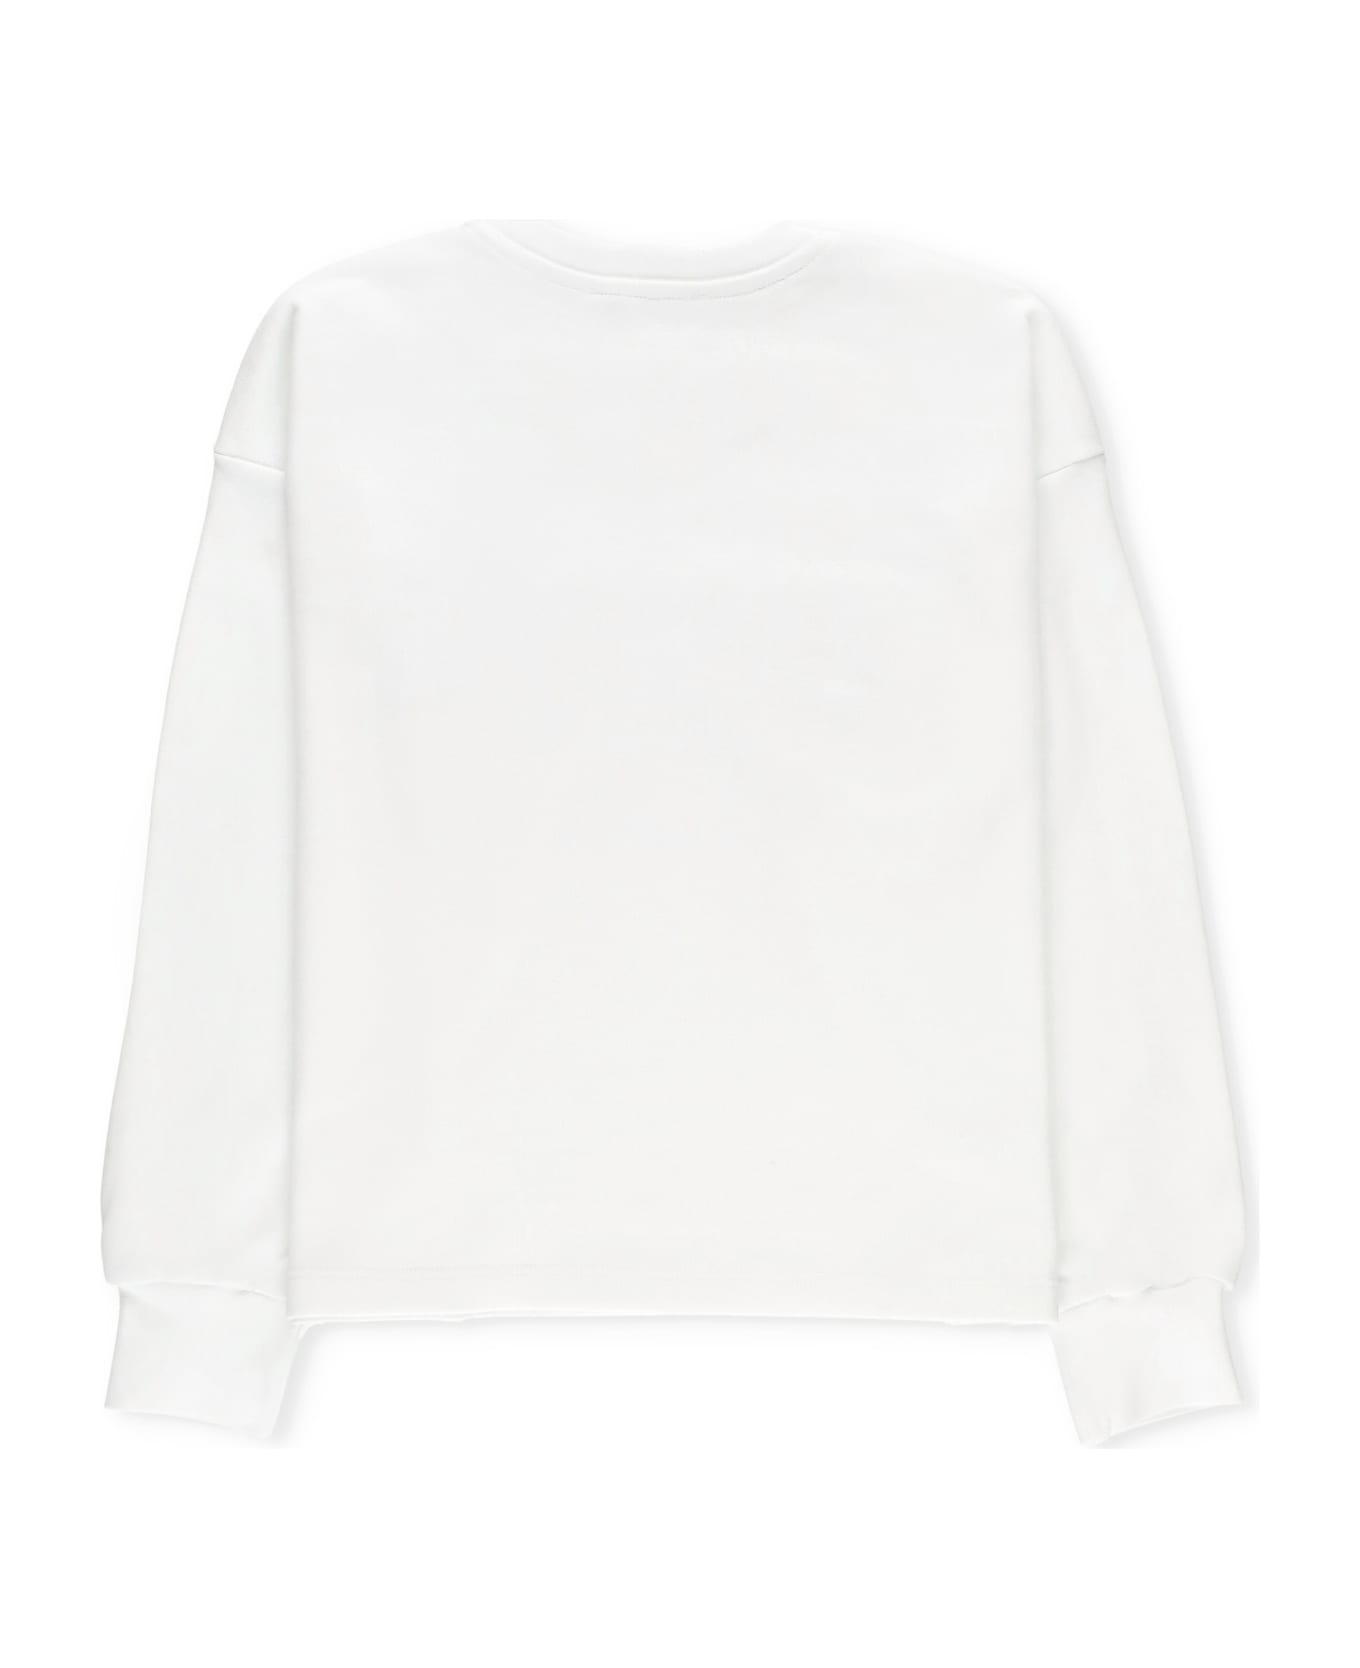 MSGM Sweatshirt With Logo - White